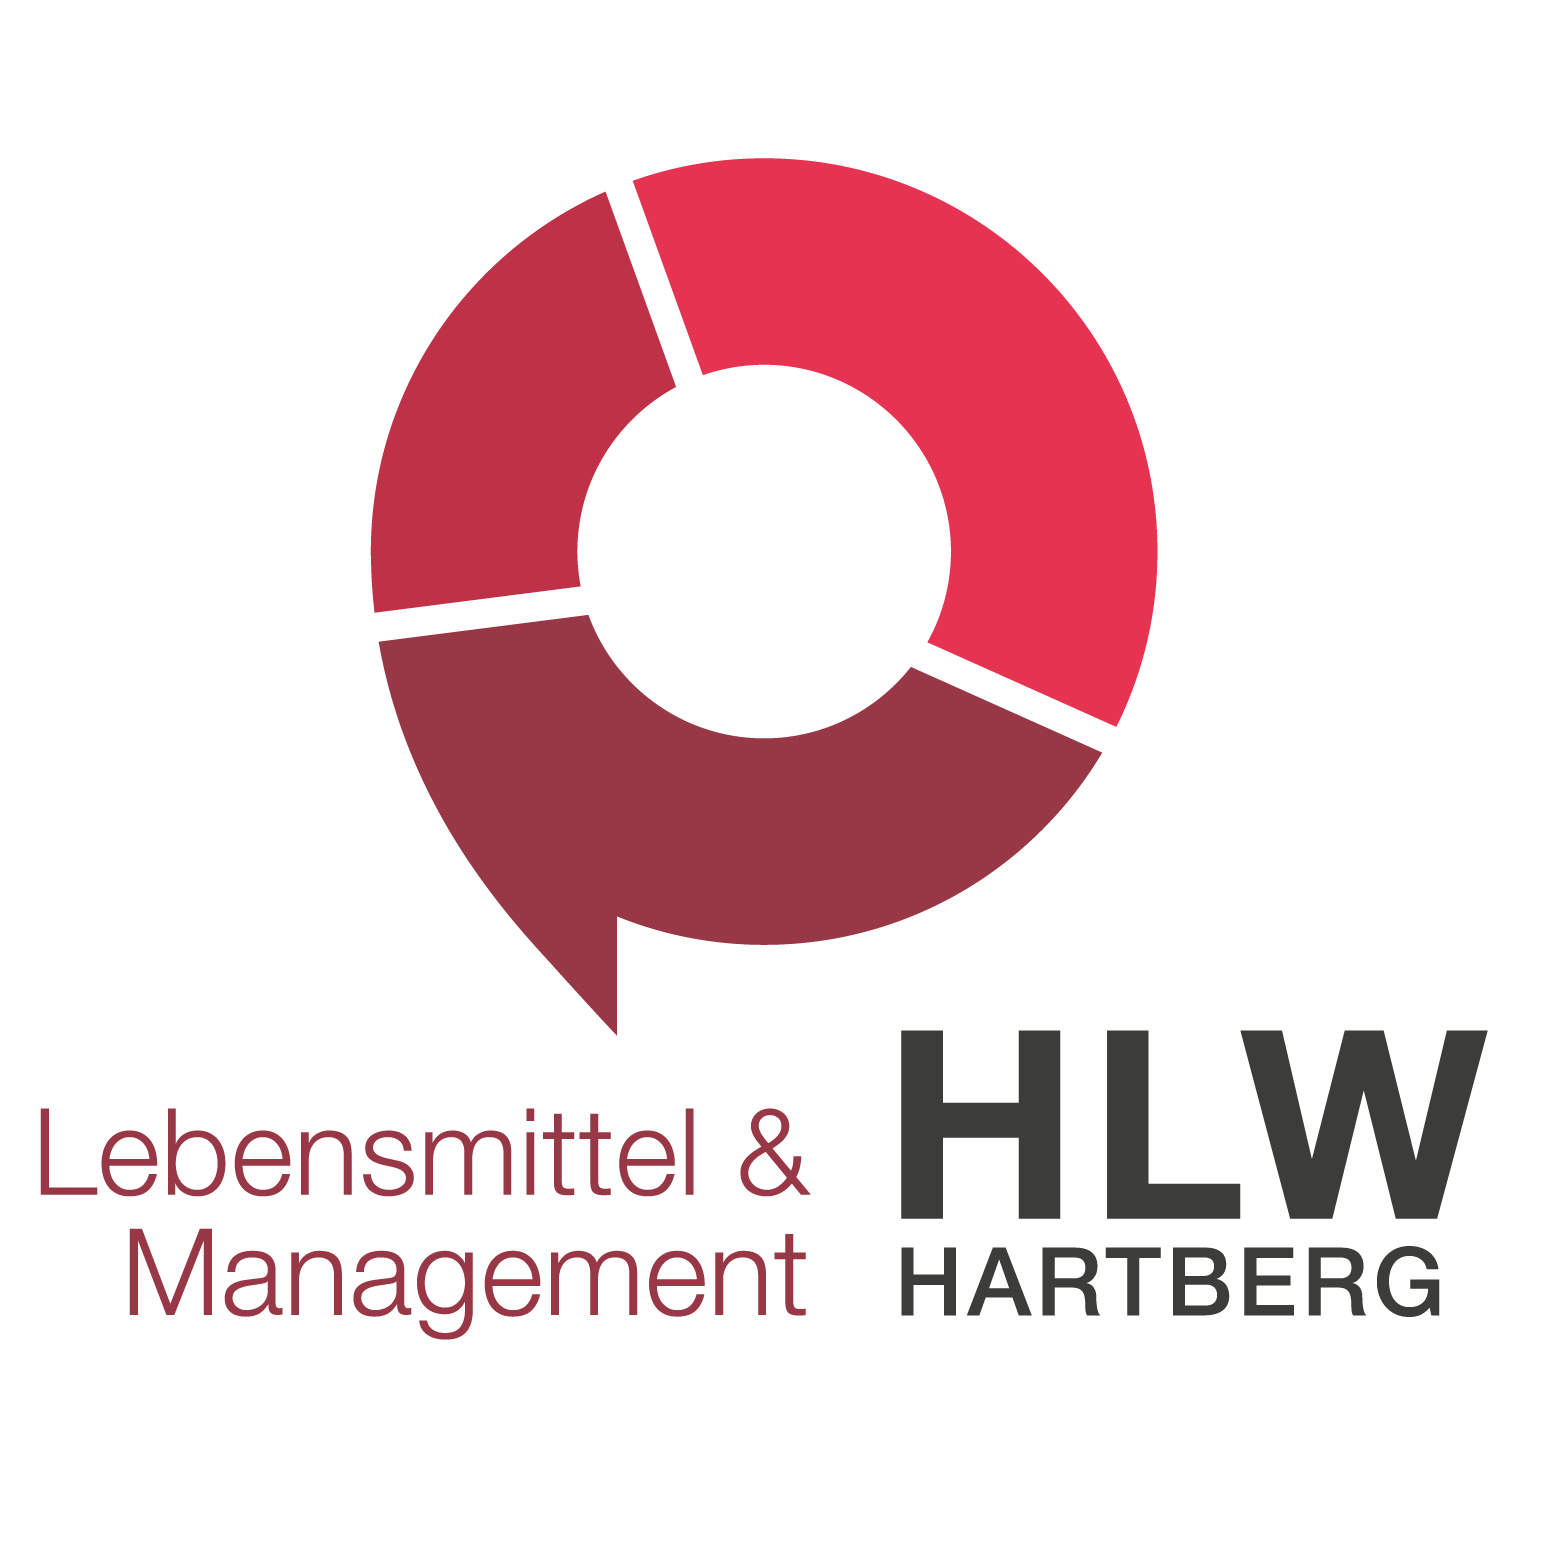 HLW Hartberg